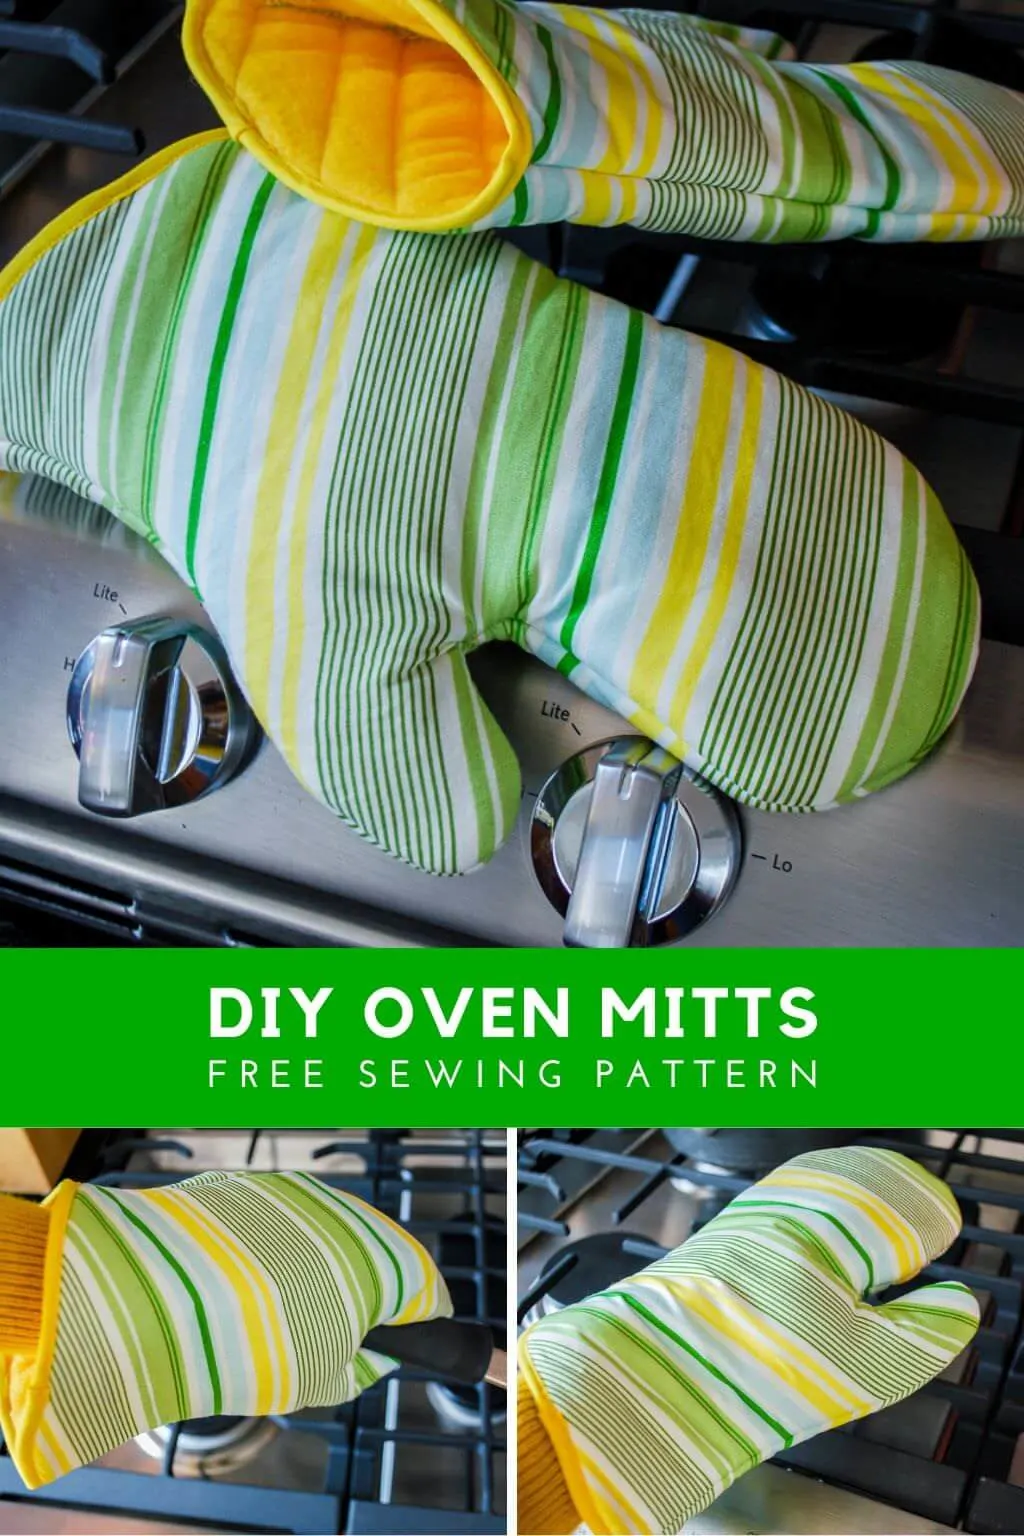 DIY Glove, How to Make Oven Mitt Easy Tutorial